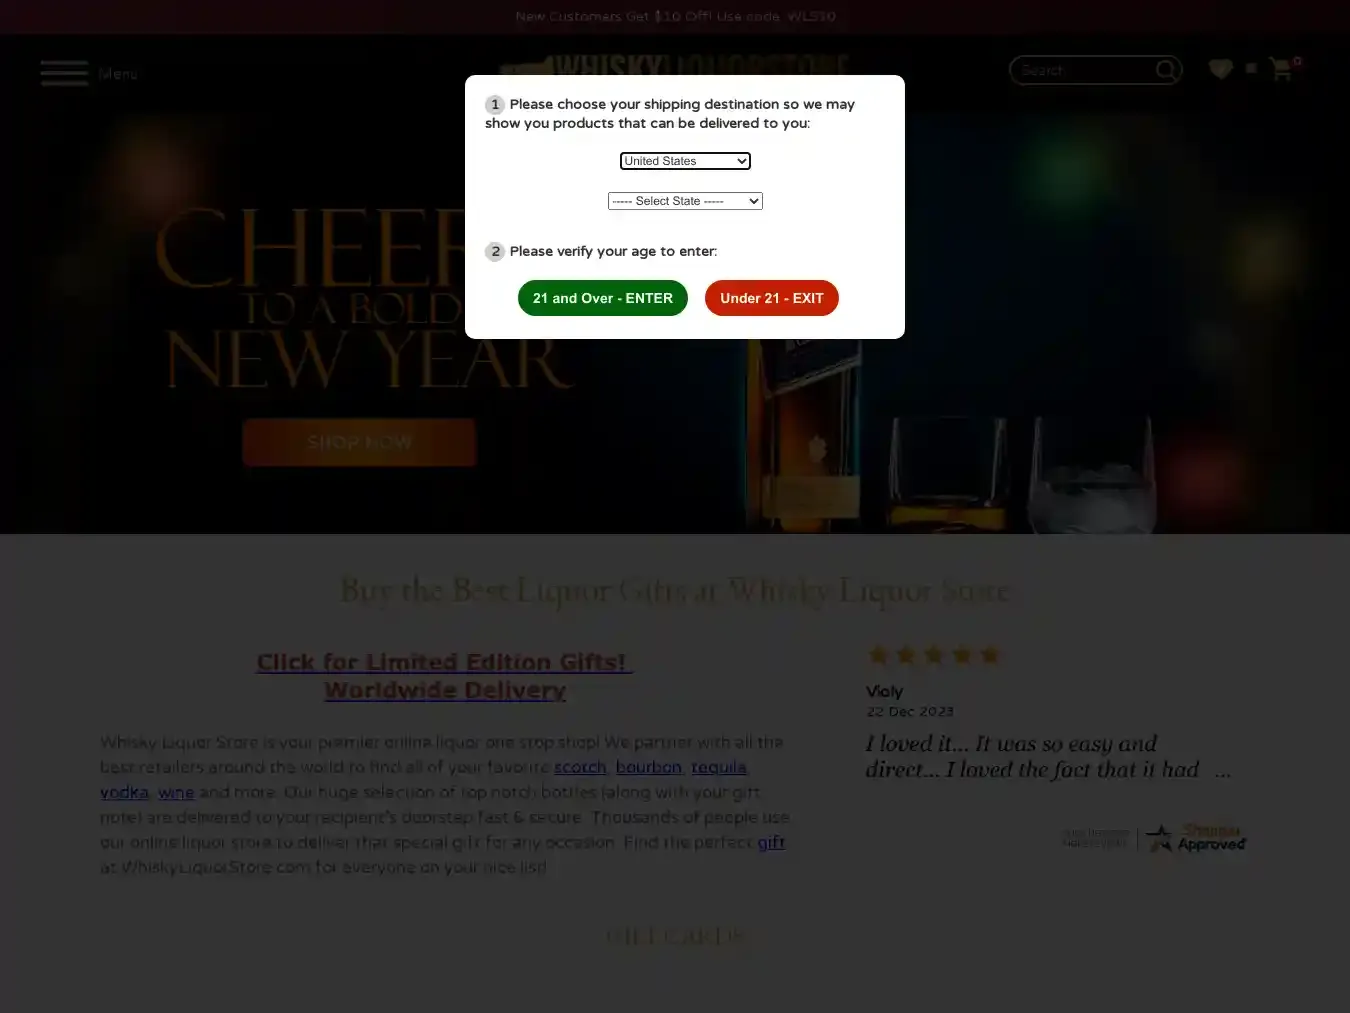 Whiskyliquorstore.com Fraudulent Whisky website.